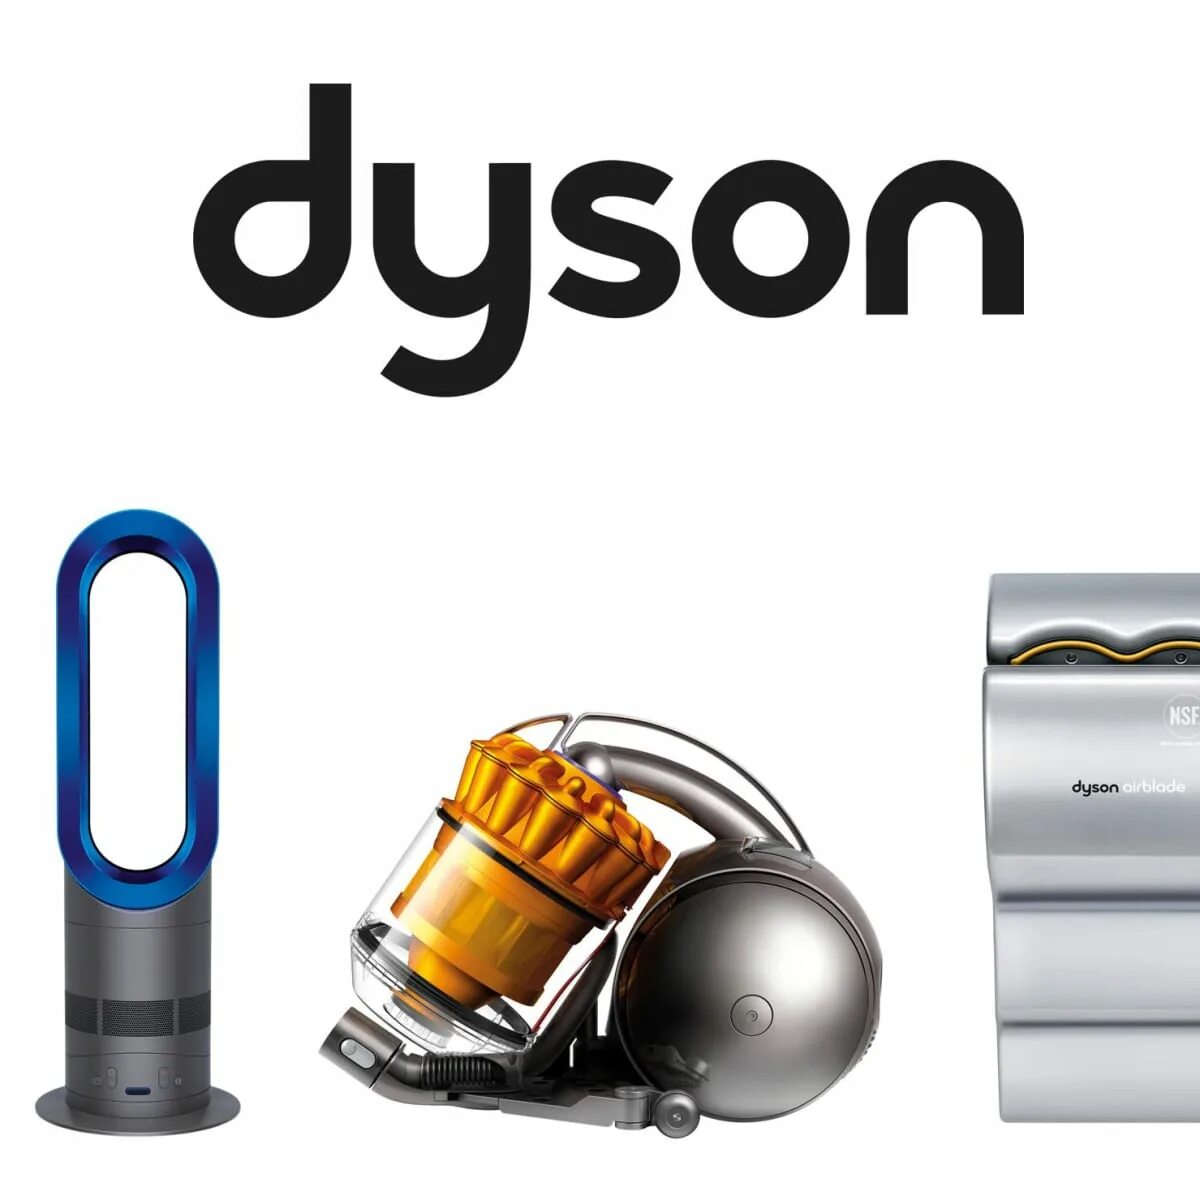 Продукция дайсон. Dyson. Дайсон бренд. Дайсон логотип. Пылесос Dyson логотип.